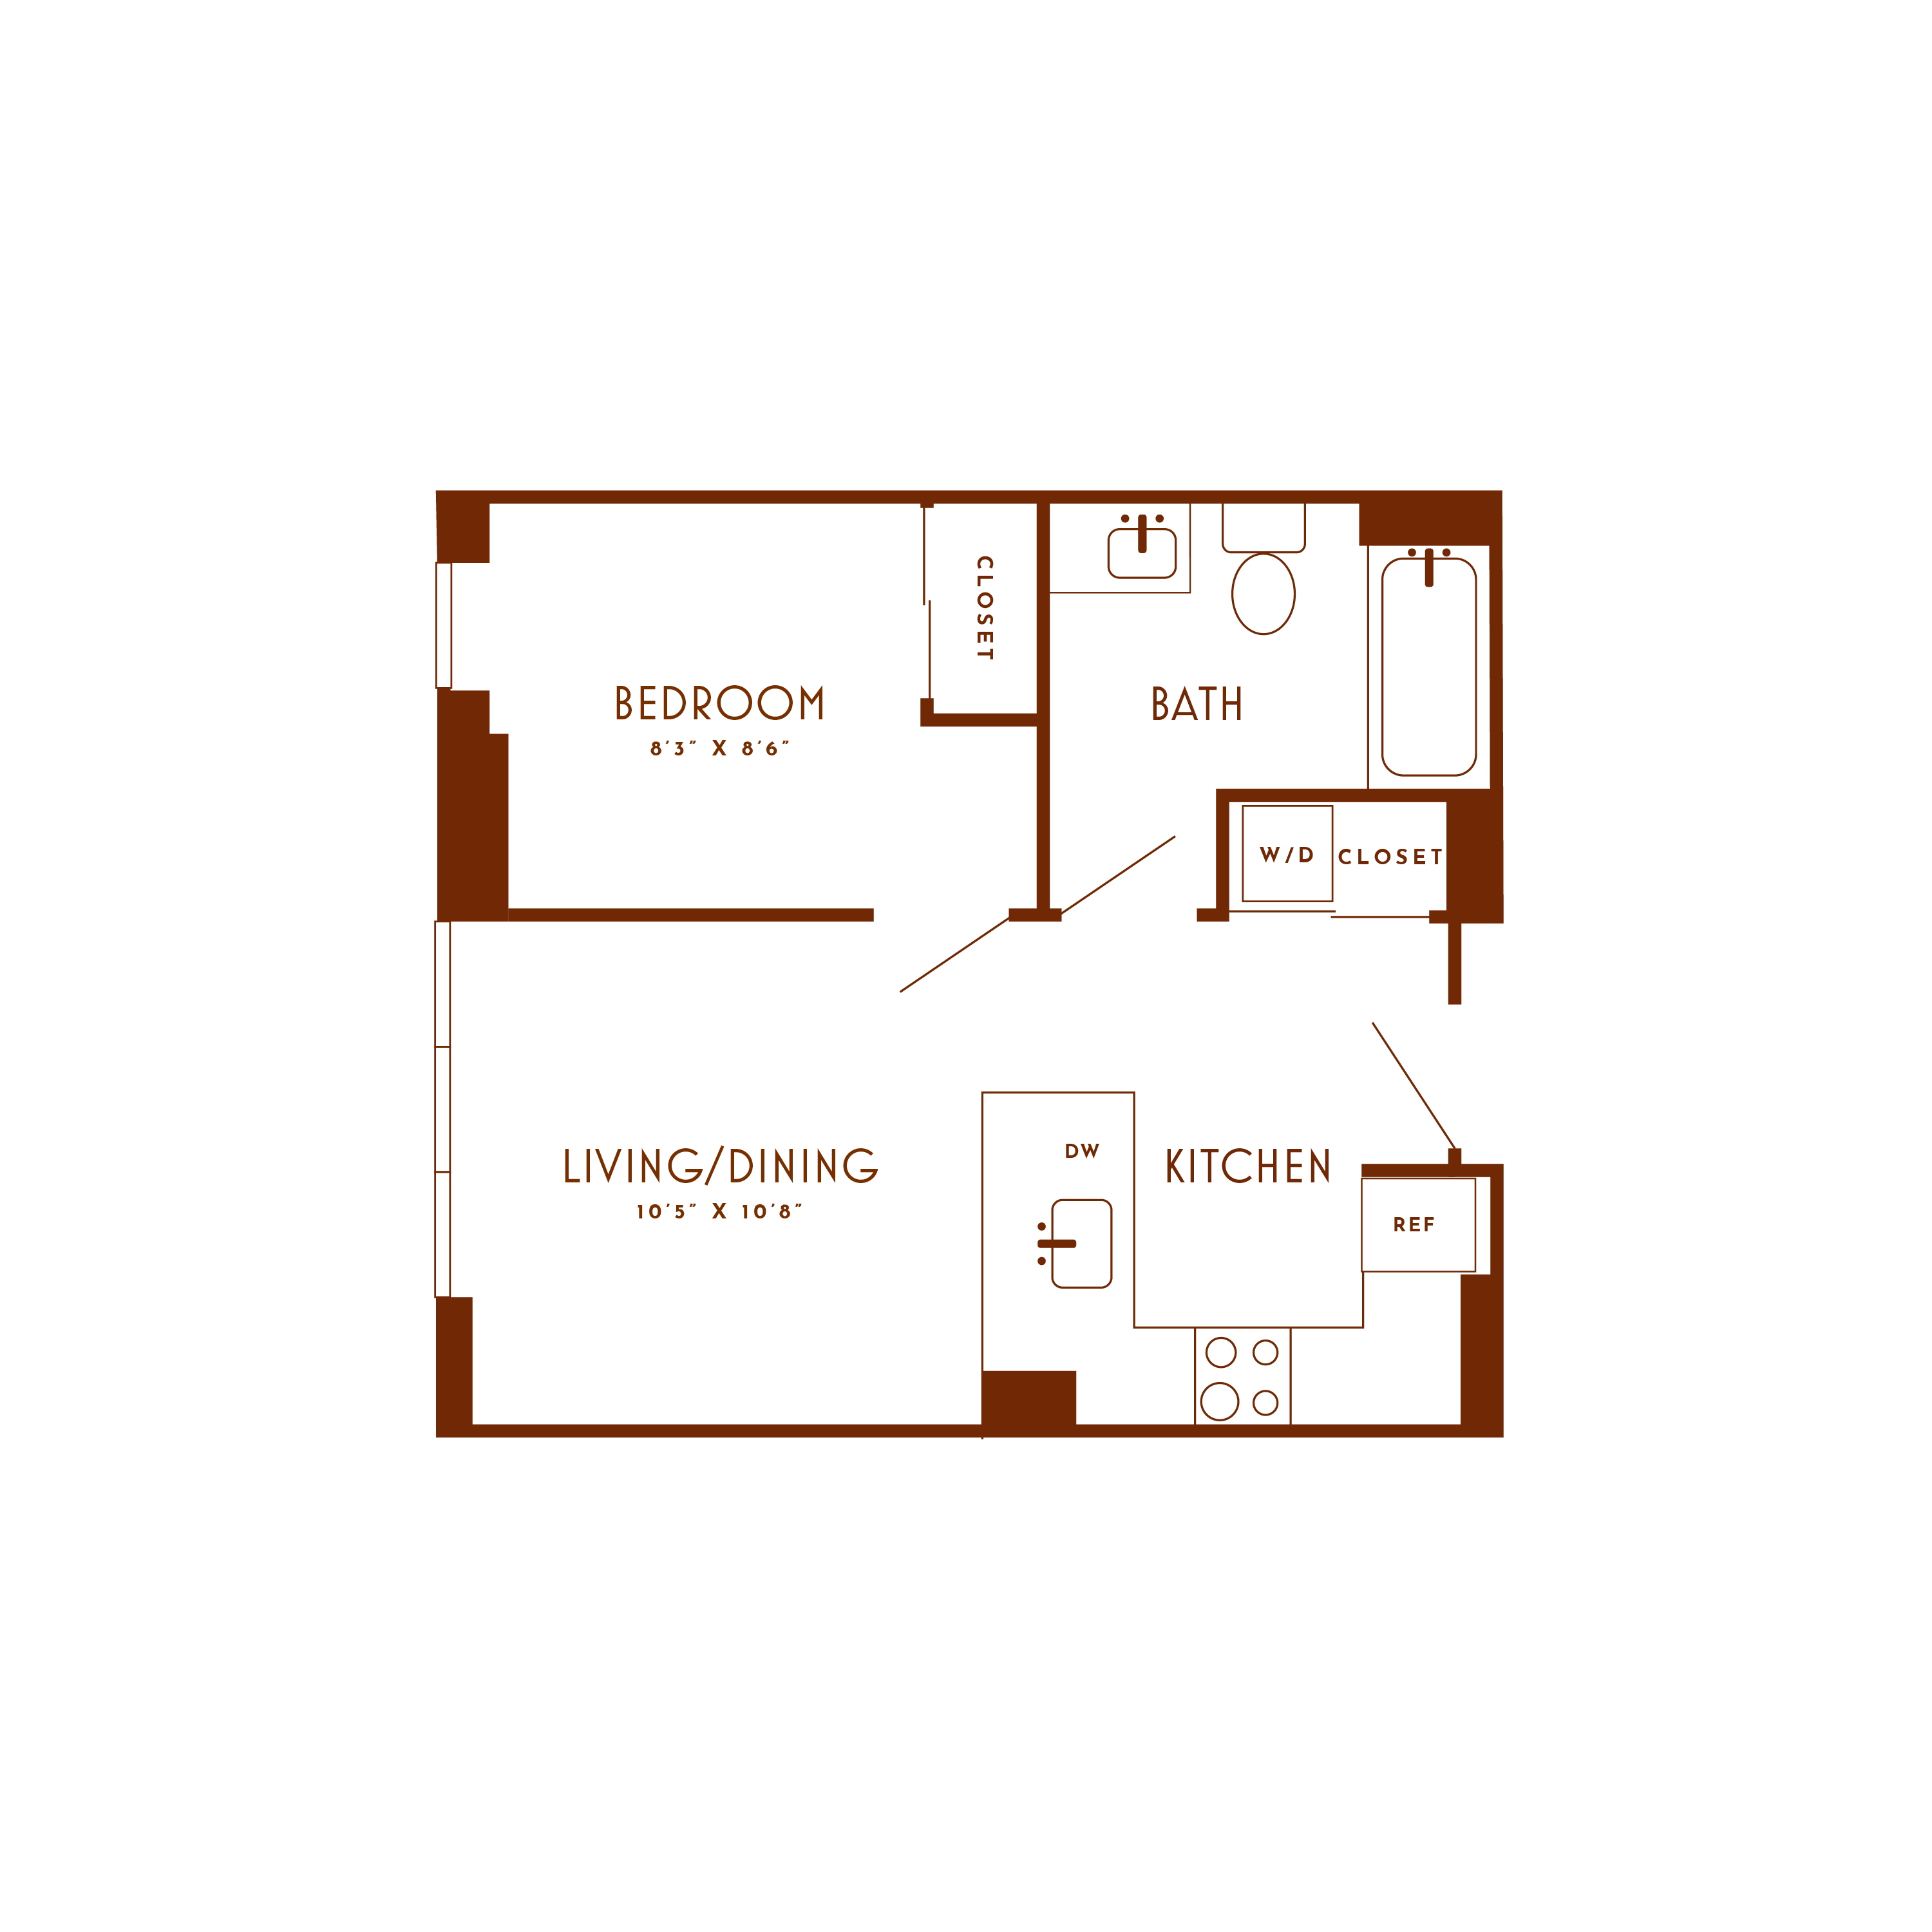 Floor plan image of unit 701